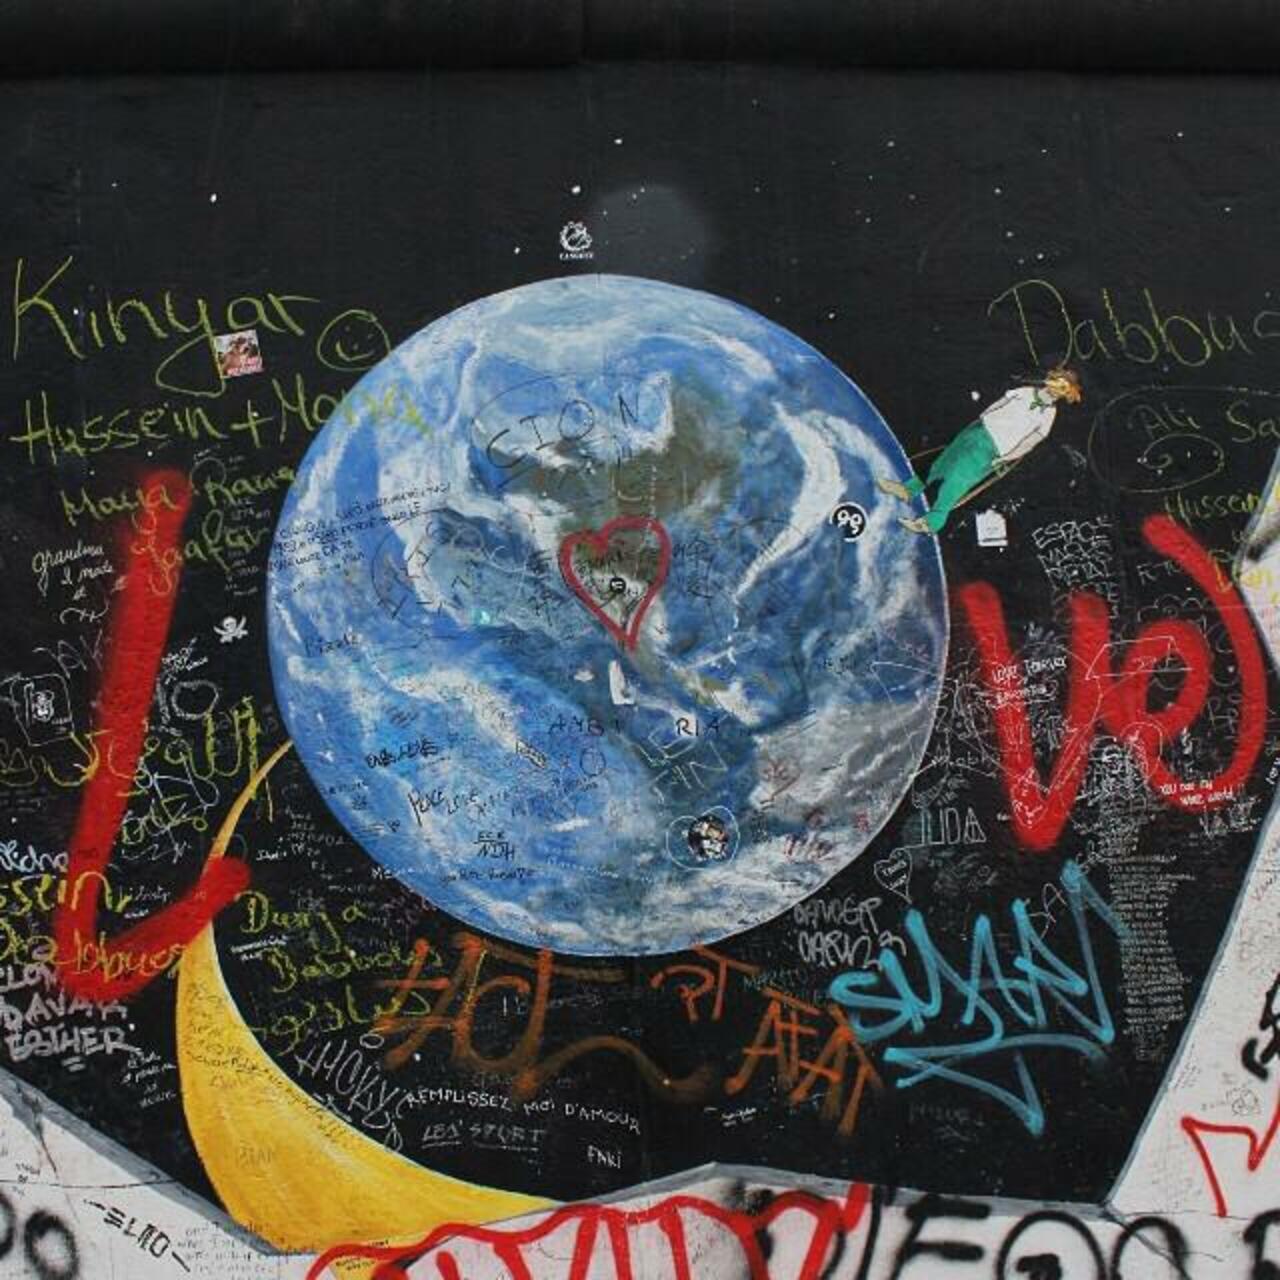 #Berlin #Allemagne #streetart #street #art #urbanart #urbantag #graffiti #streetartberlin #EastSideGallery by becom… http://t.co/8O9wuAghhc